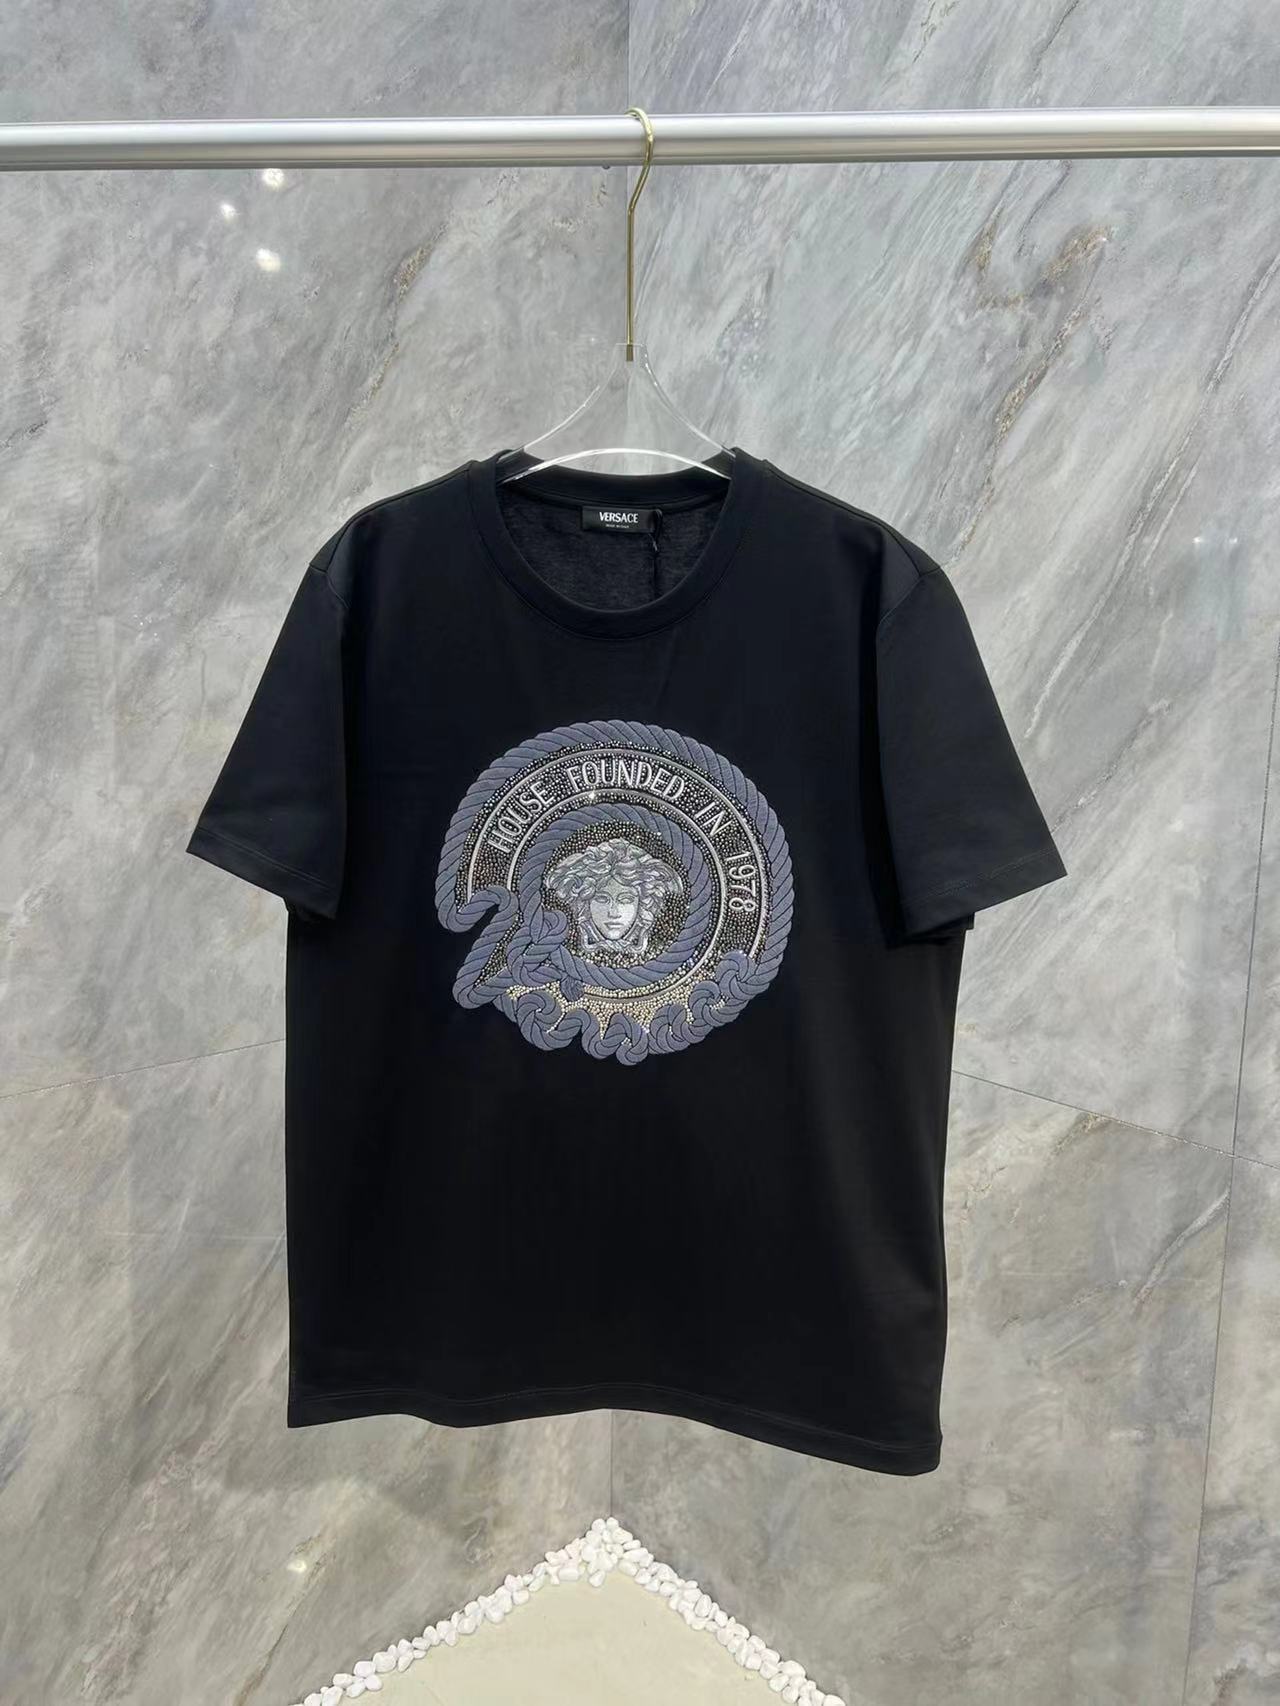 20240403 Versace潮流T恤 凡賽斯 范思哲短袖 海外專櫃原單代購 專櫃官網同步在售